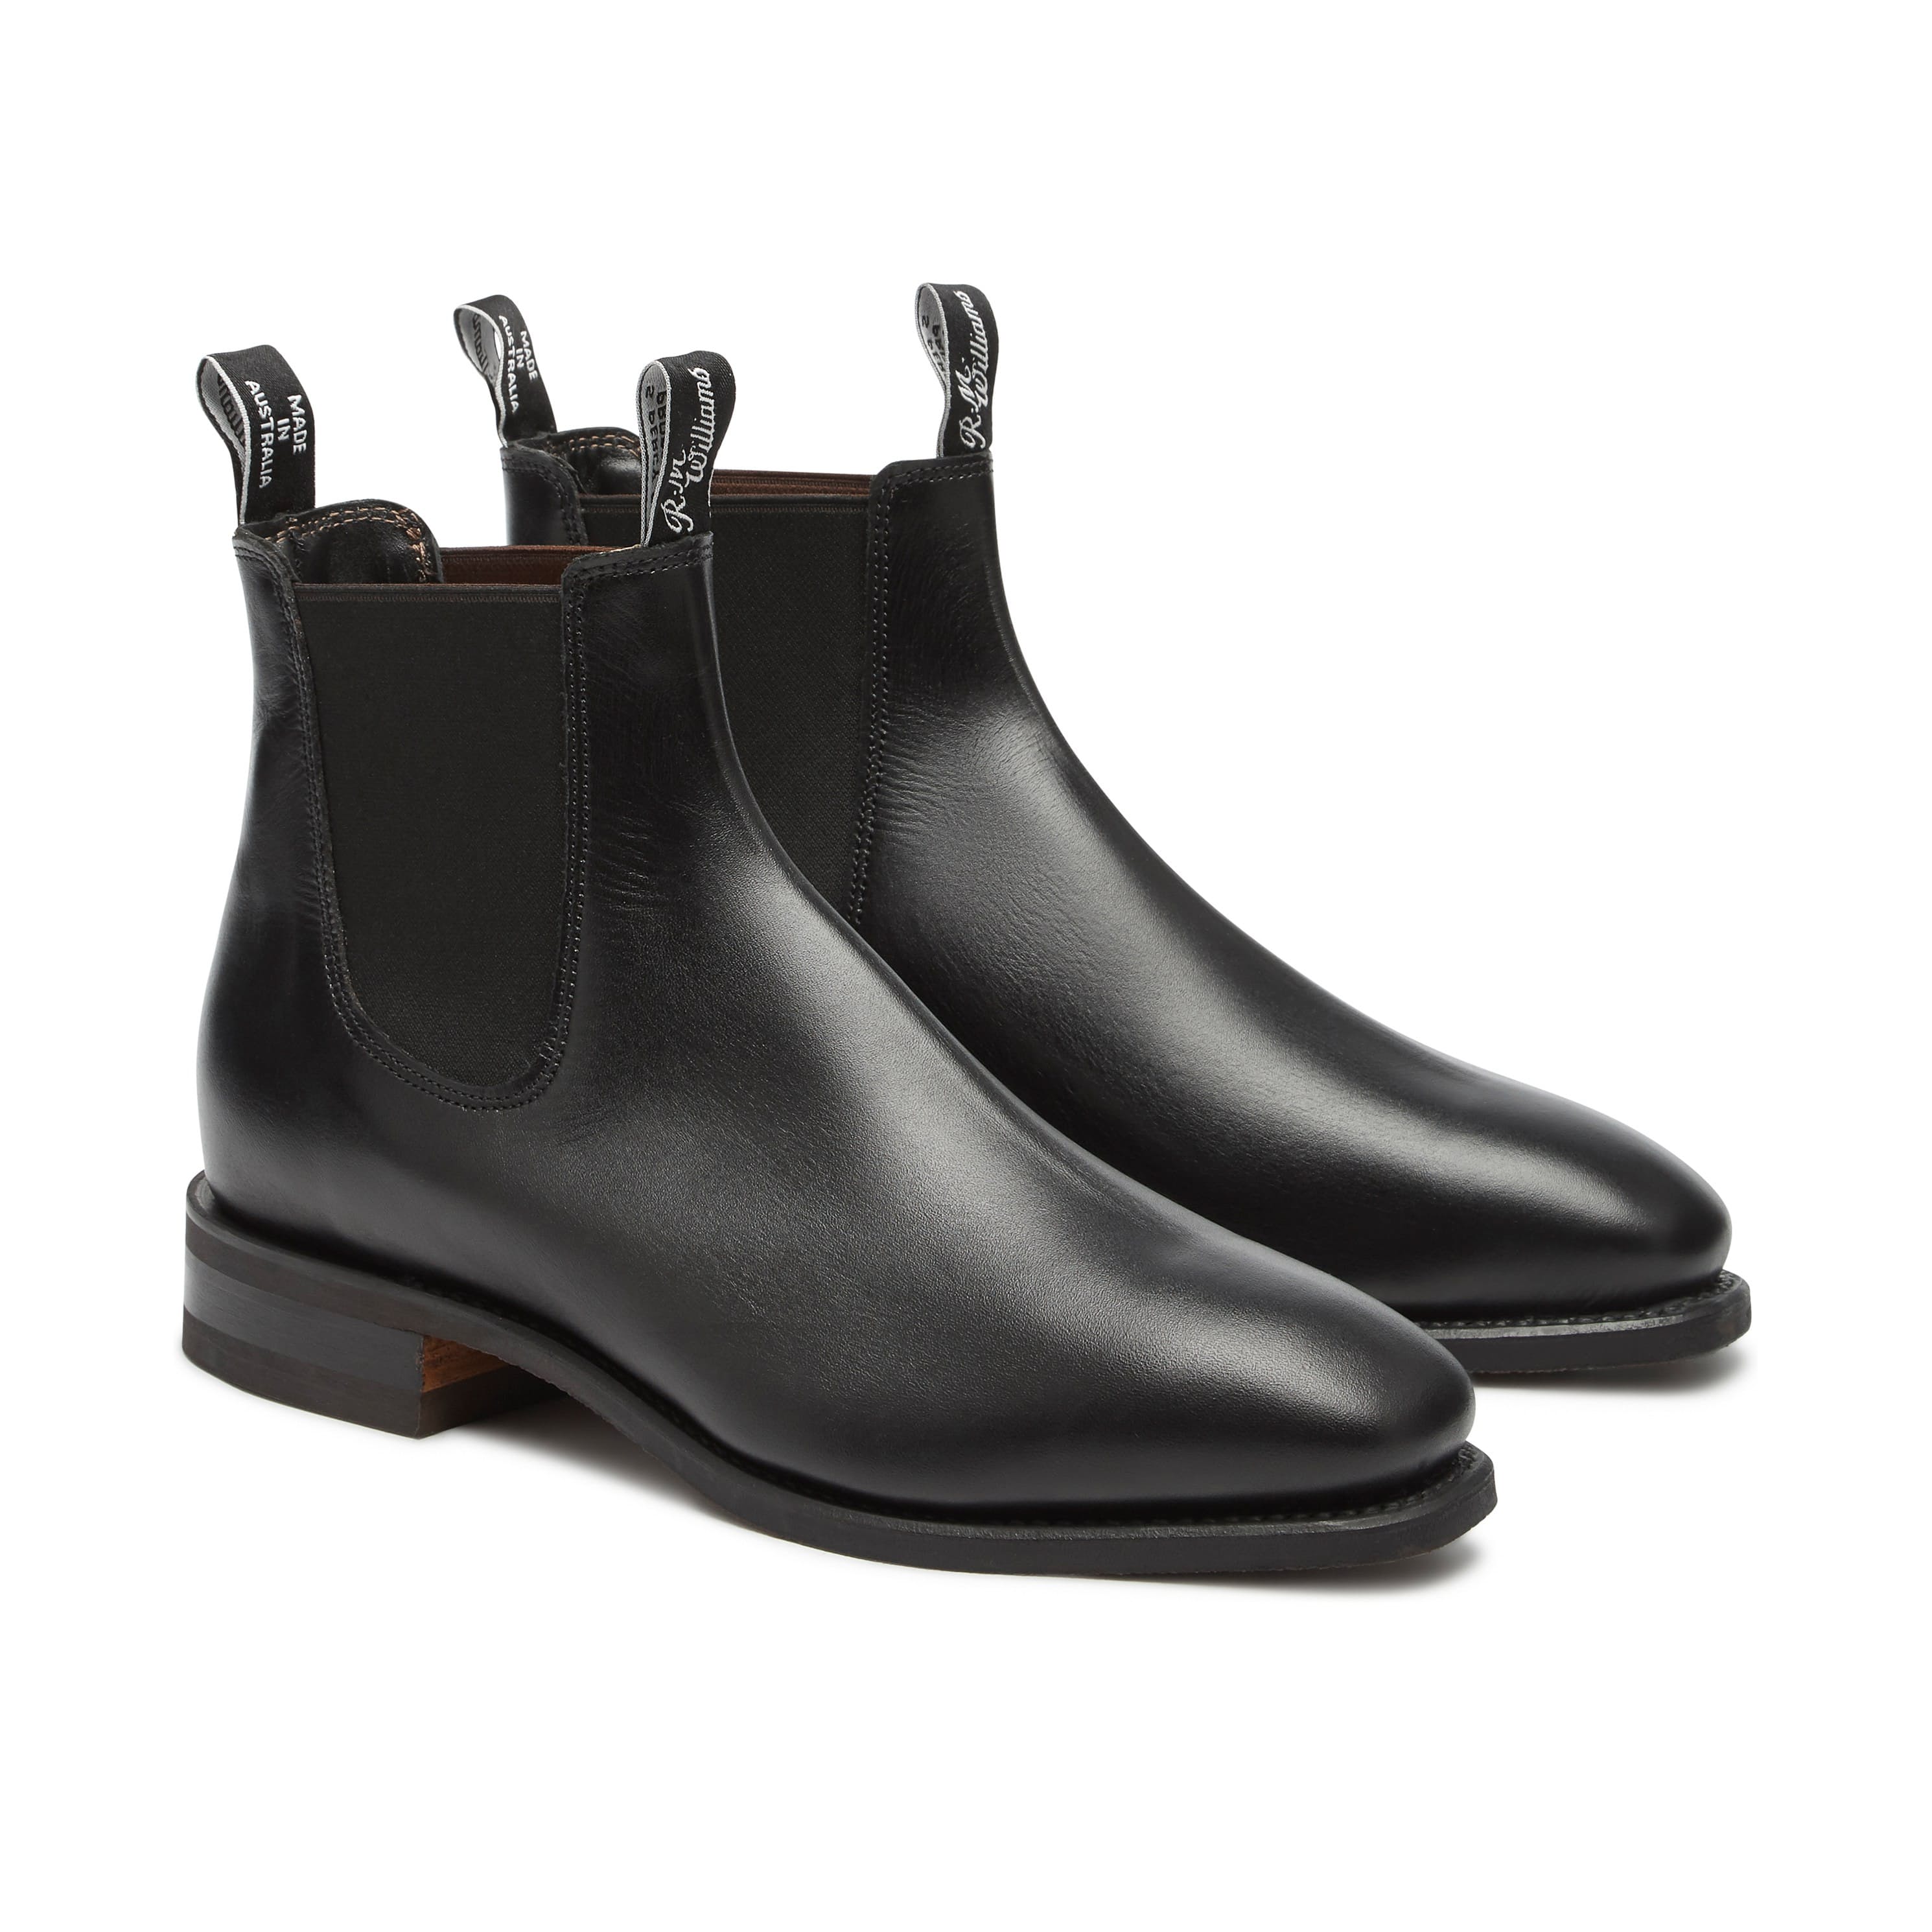 File:Black RM Williams comfort craftsman boots - top view.jpg